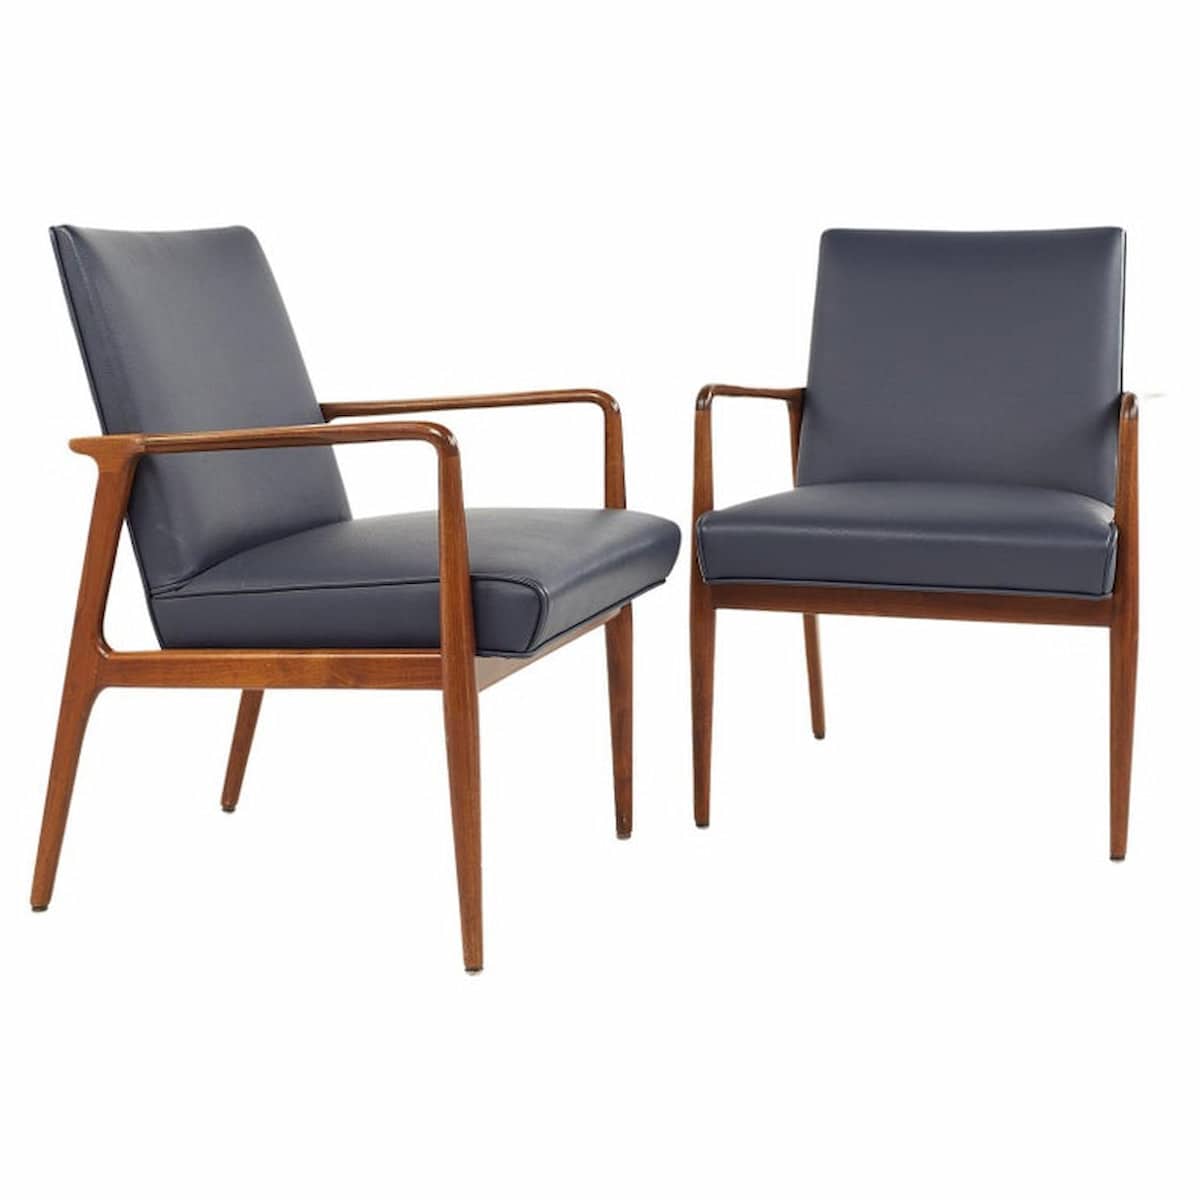 Stow Davis Mid Century Lounge Chair - a Pair